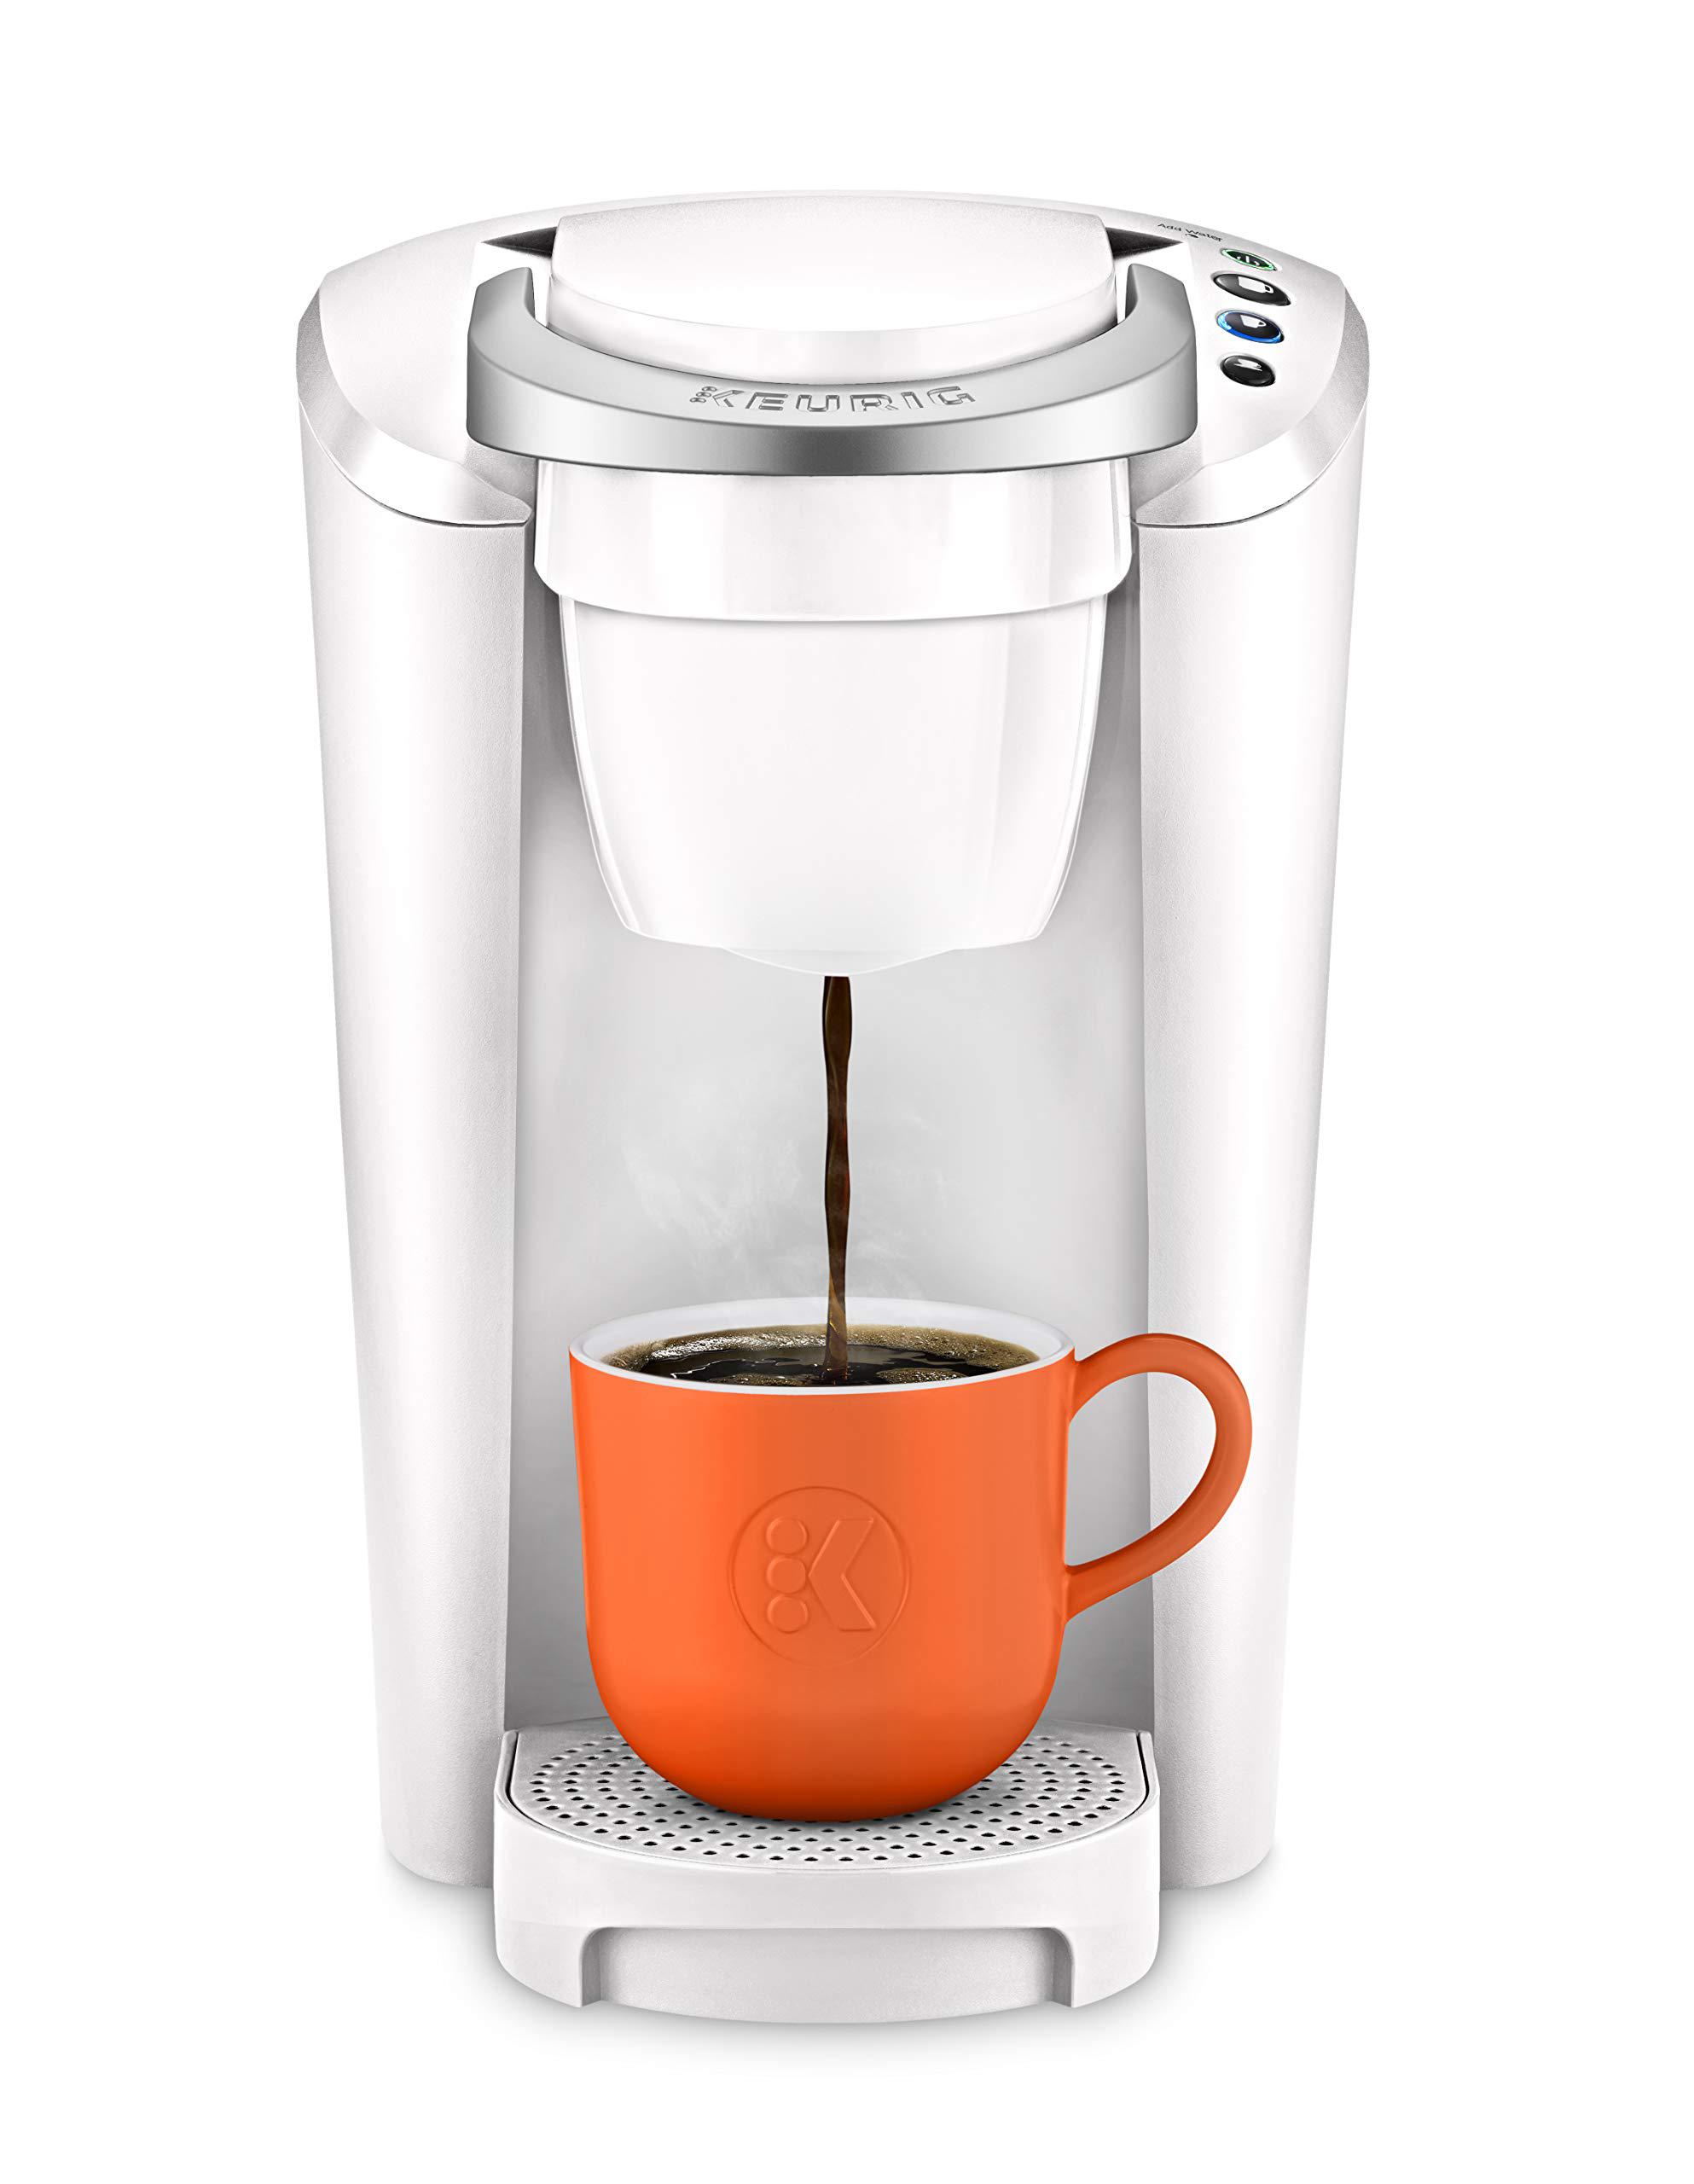 keurig k-compact single-serve k-cup pod coffee maker, white